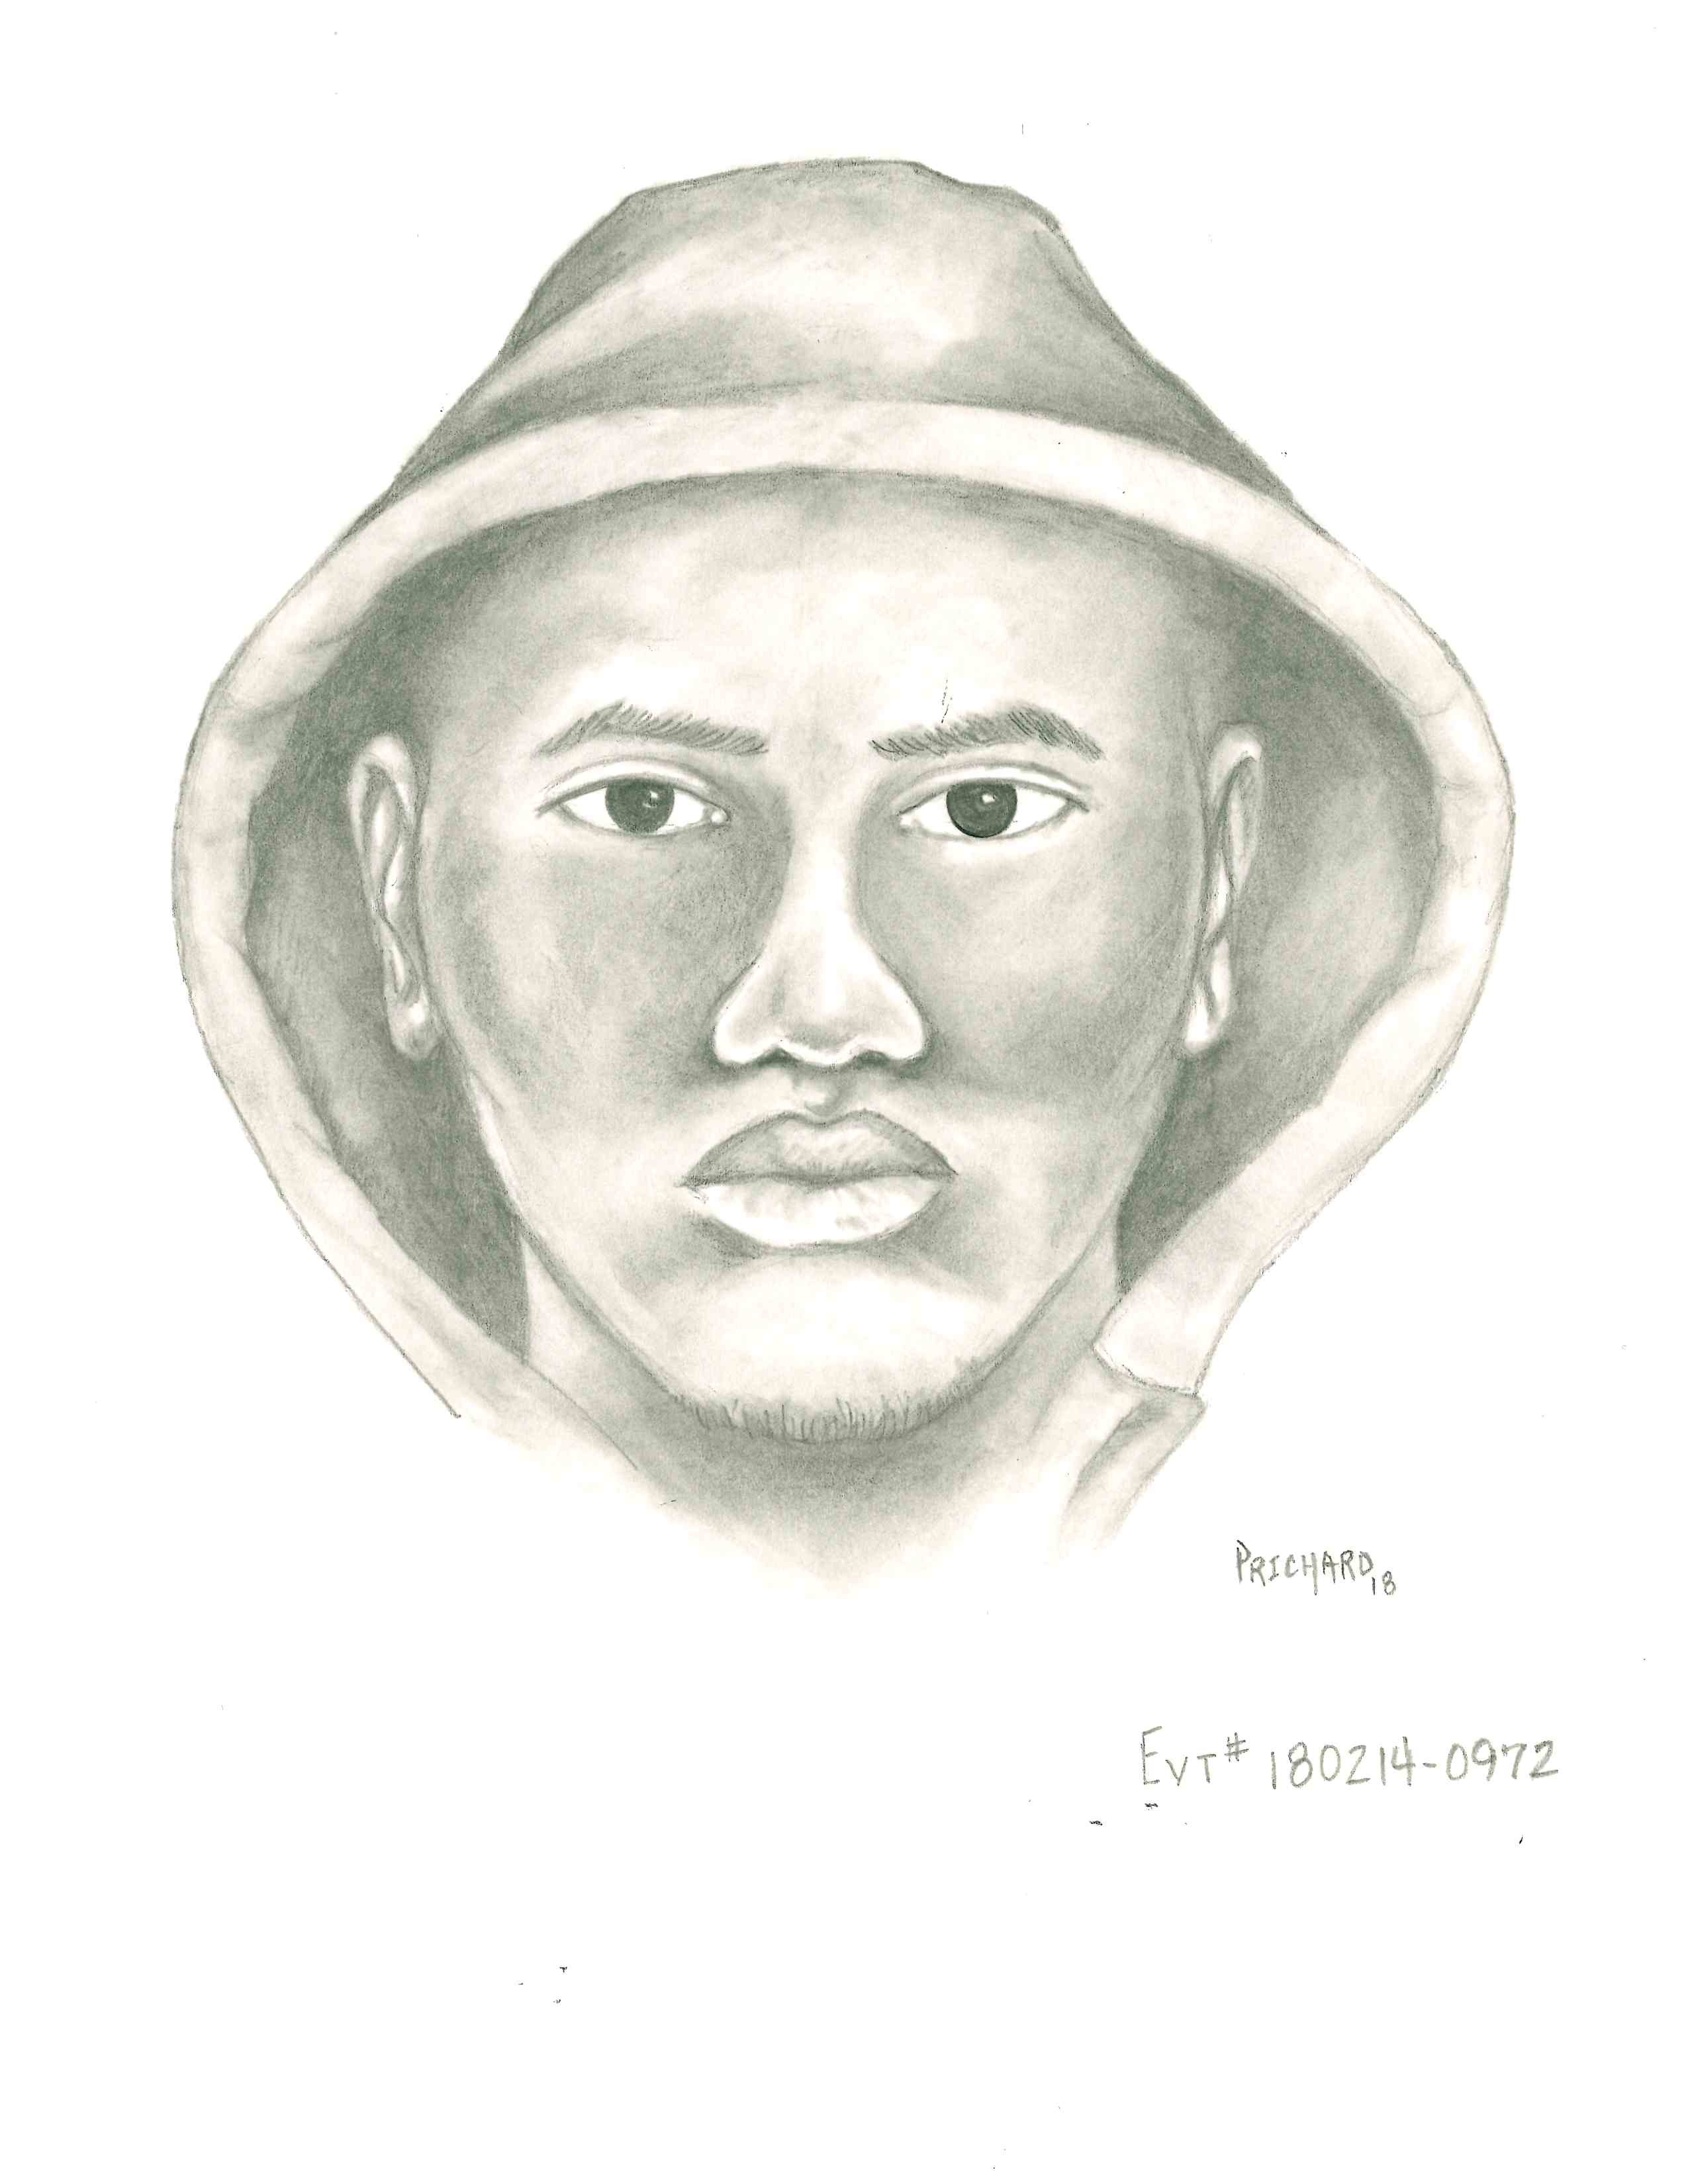 Sketch-Detectives Seek To Identify Burglary Suspect